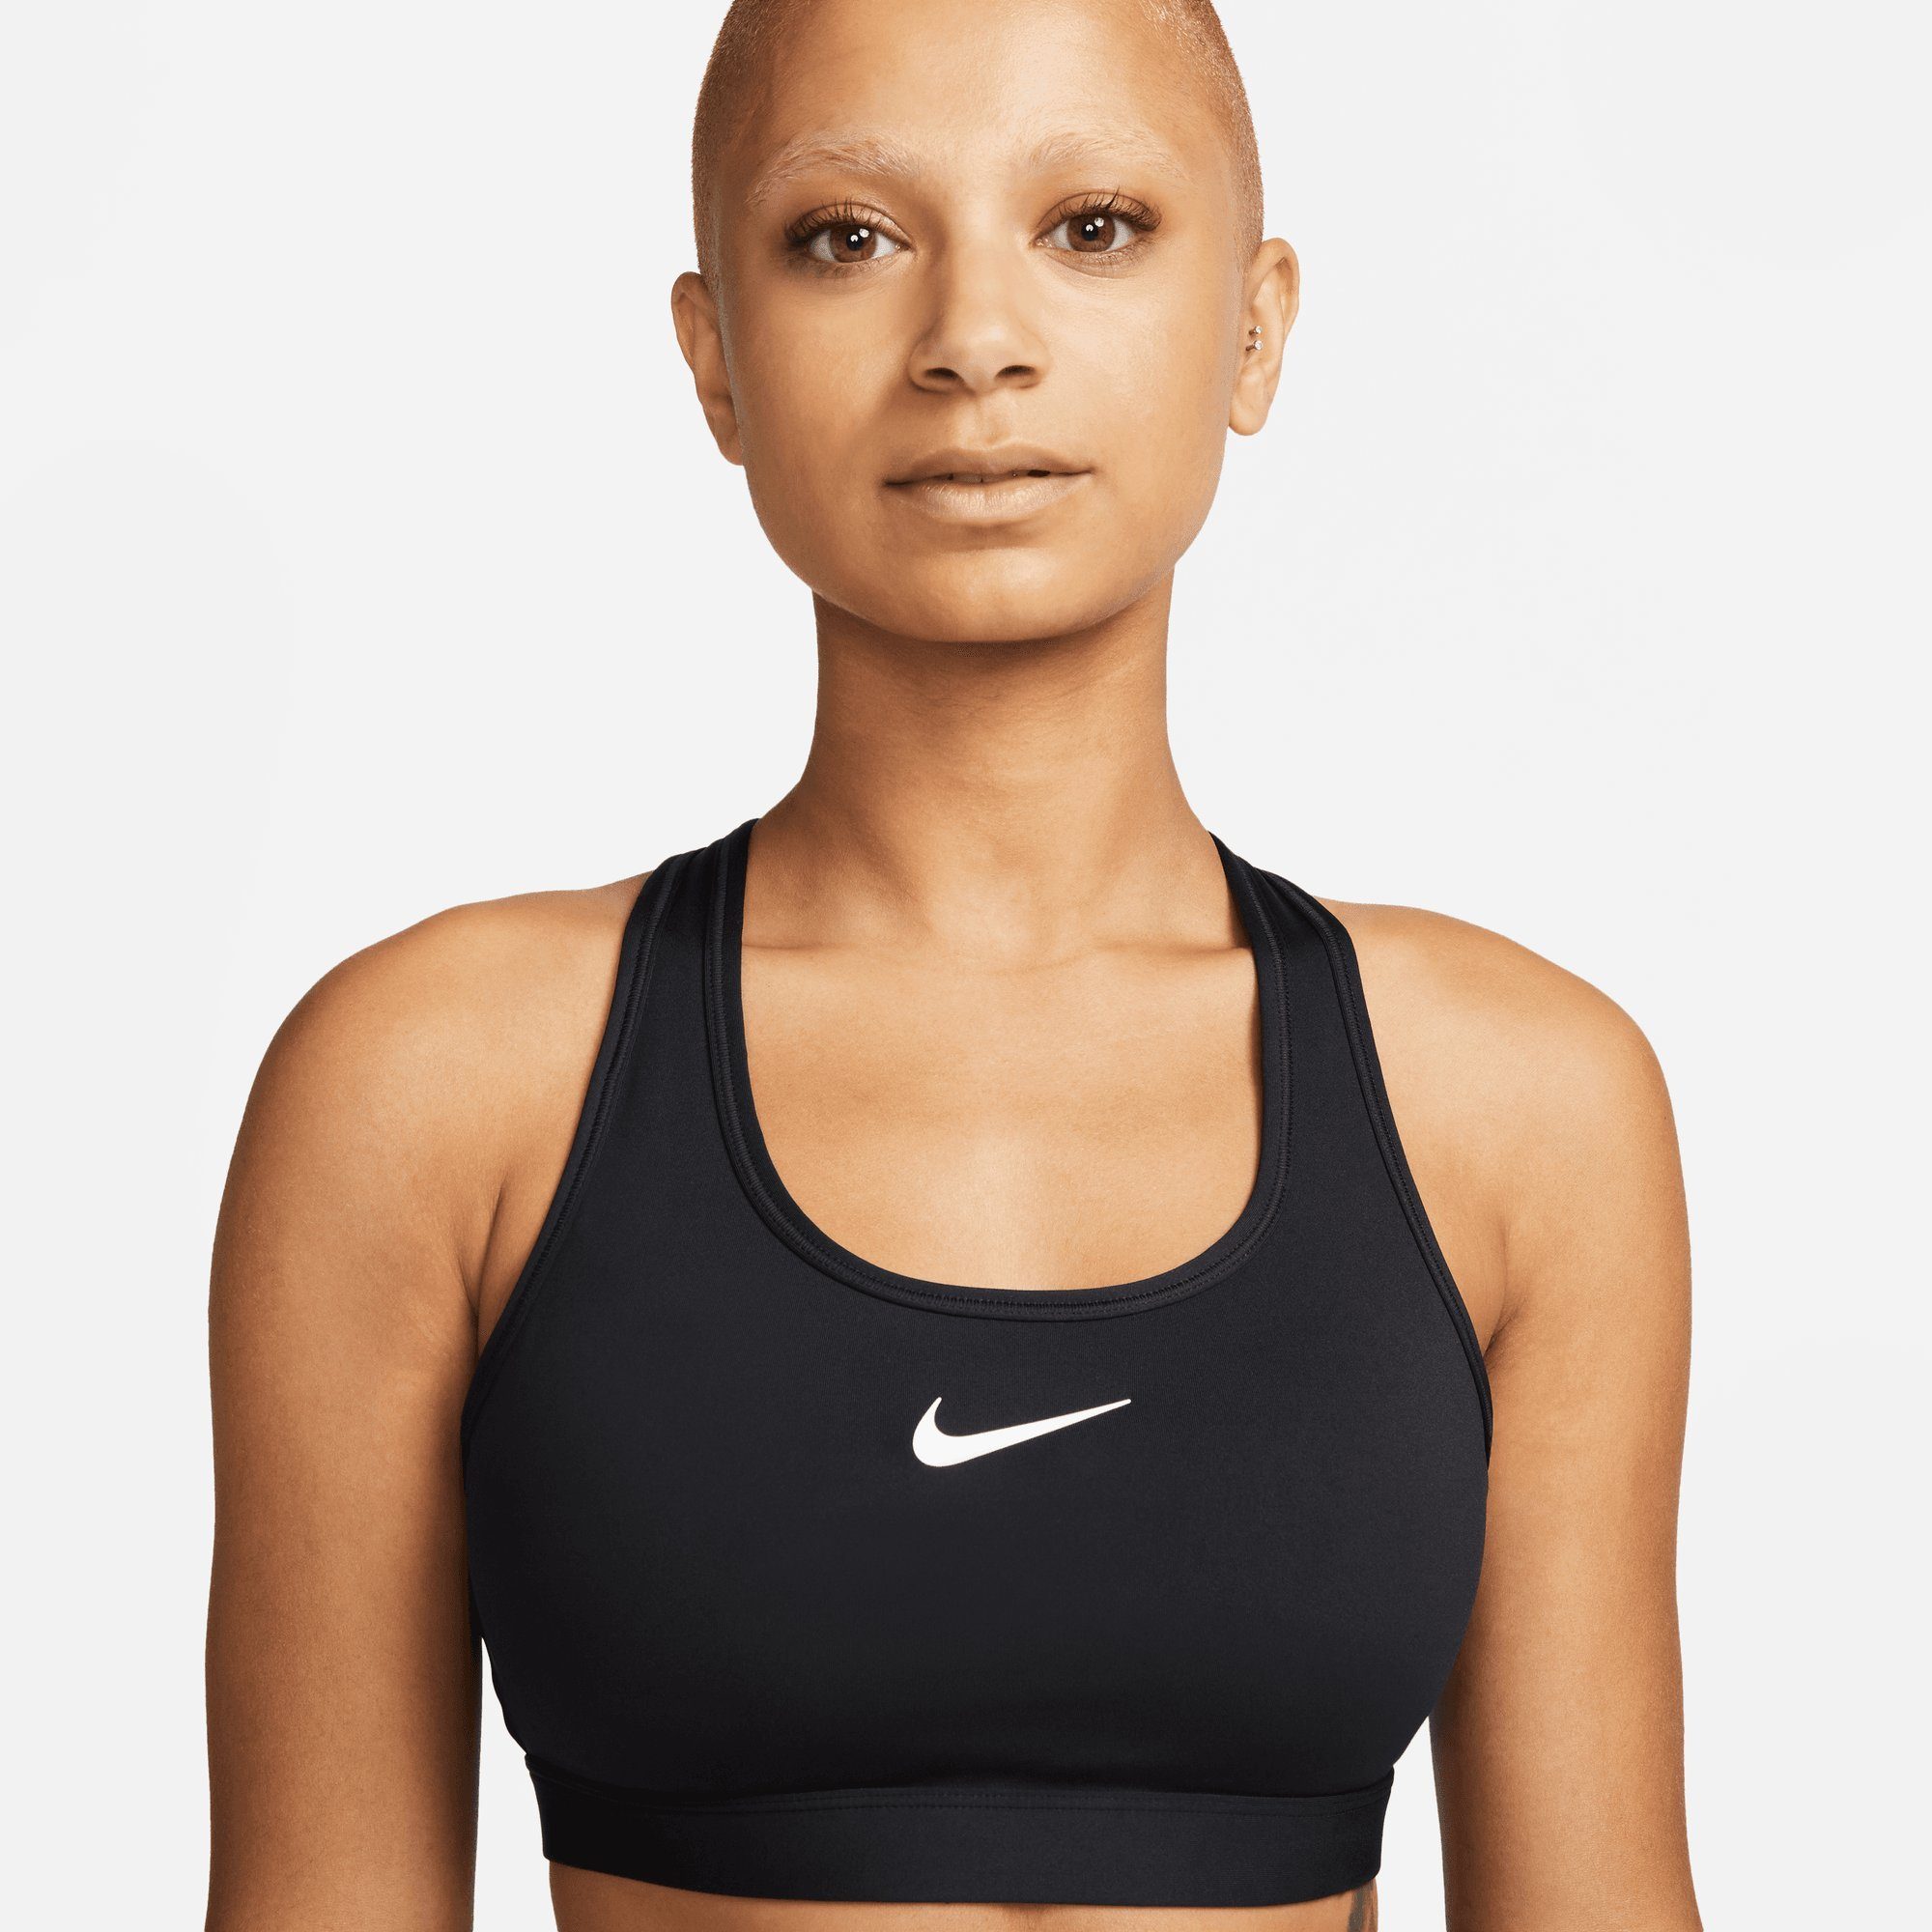 BRA BLACK/WHITE SWOOSH MEDIUM Nike SPORTS SUPPORT Sport-BH PADDED WOMEN'S